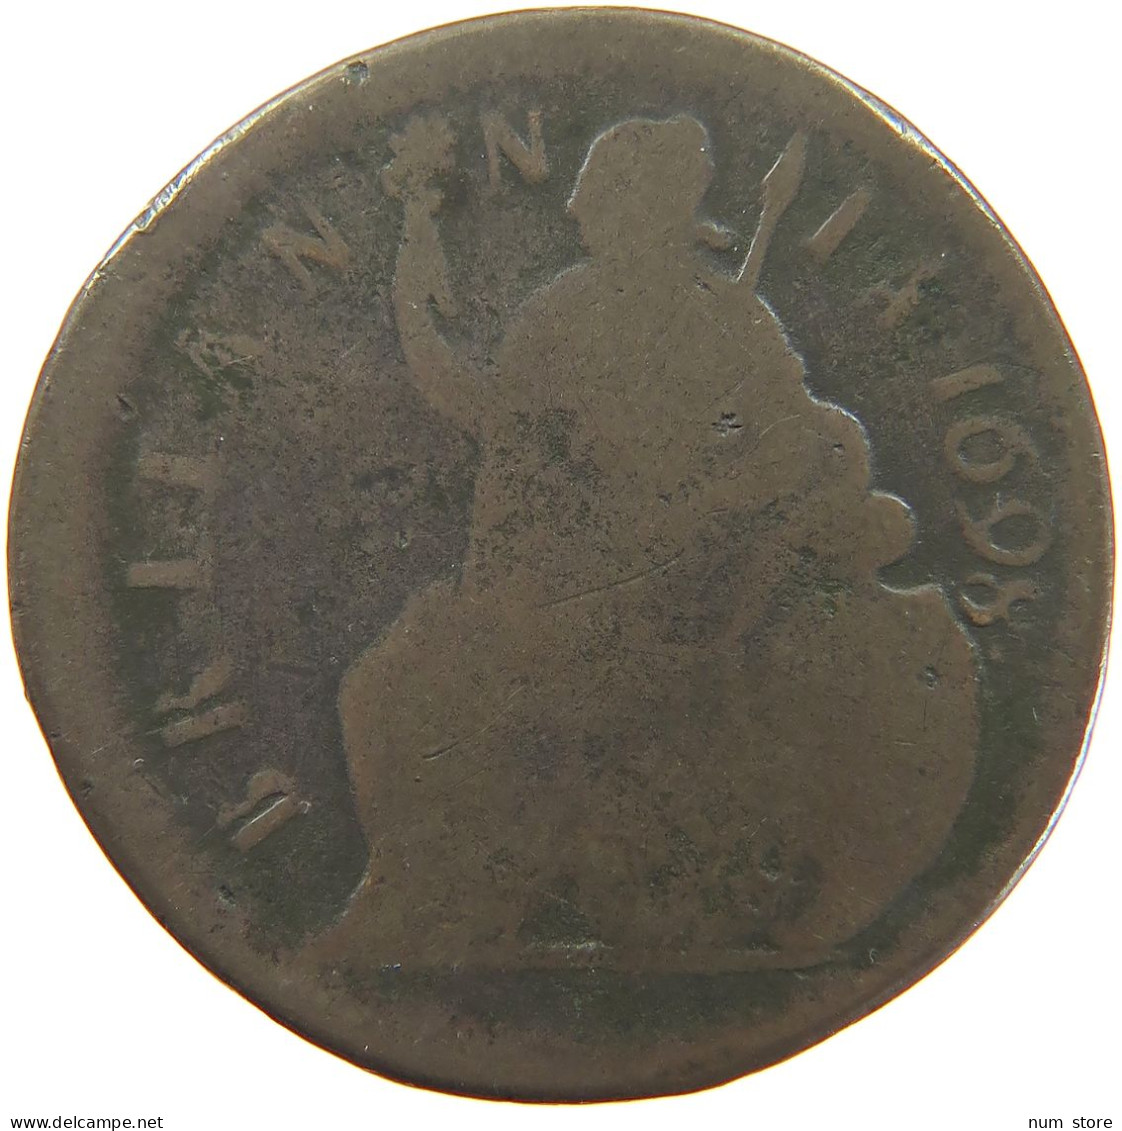 GREAT BRITAIN HALFPENNY 1/2 PENNY 1698; WILLIAM III. (1694-1702) #t021 0097 - B. 1/2 Penny